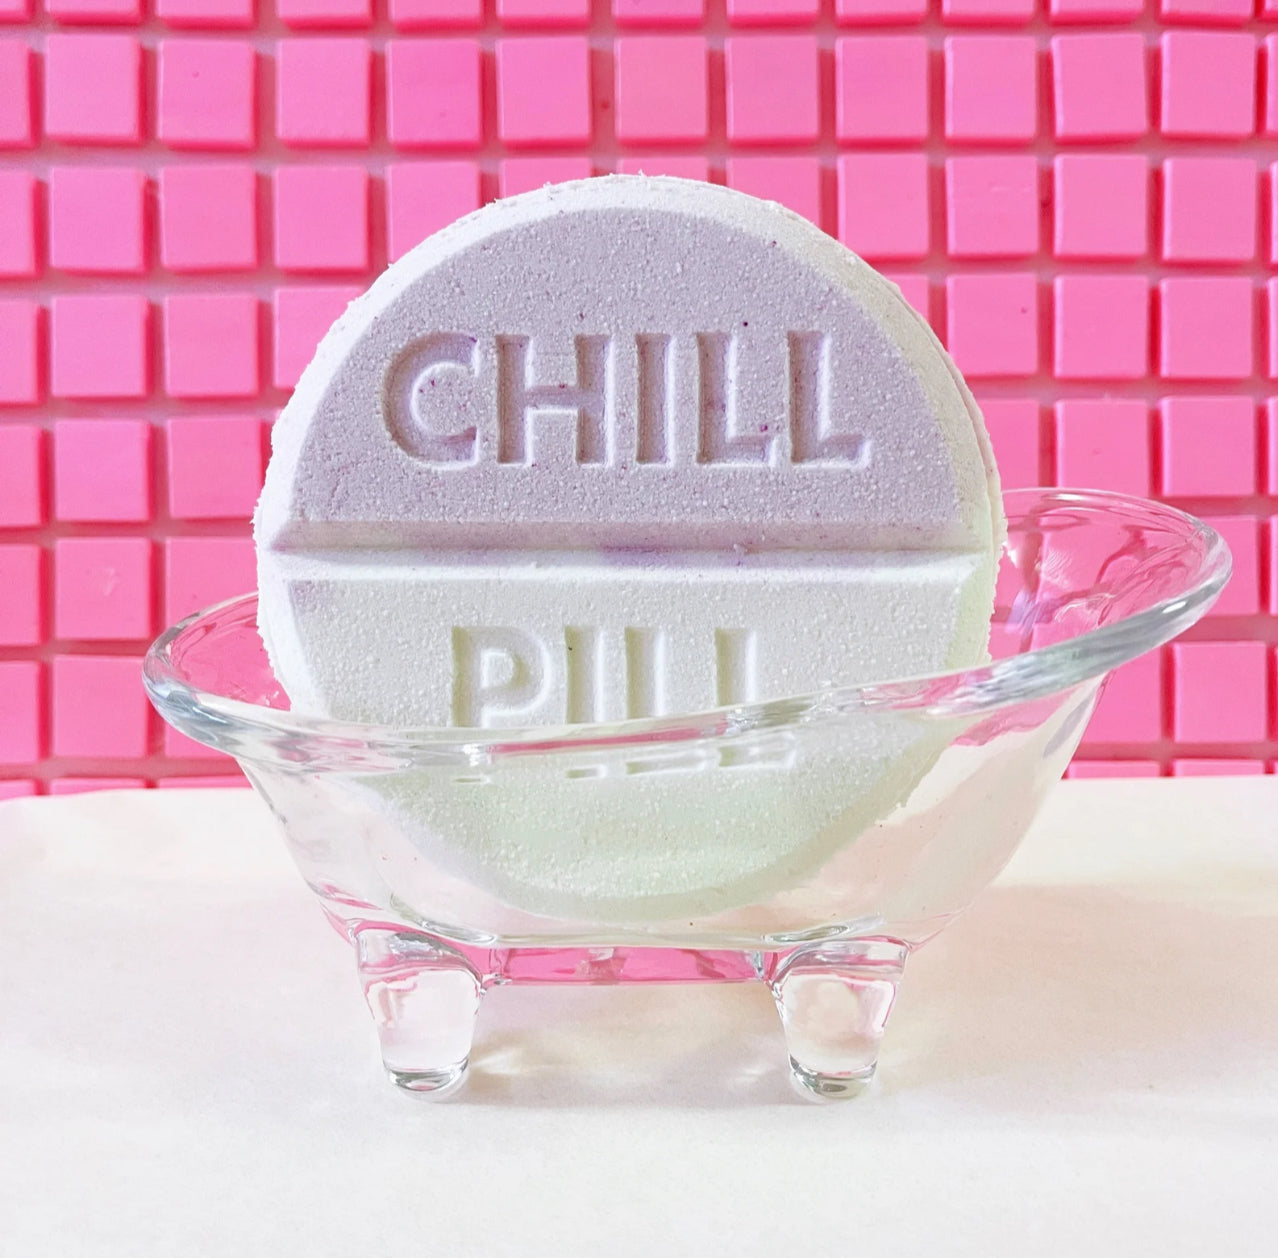 Chill Pill Bath Bomb